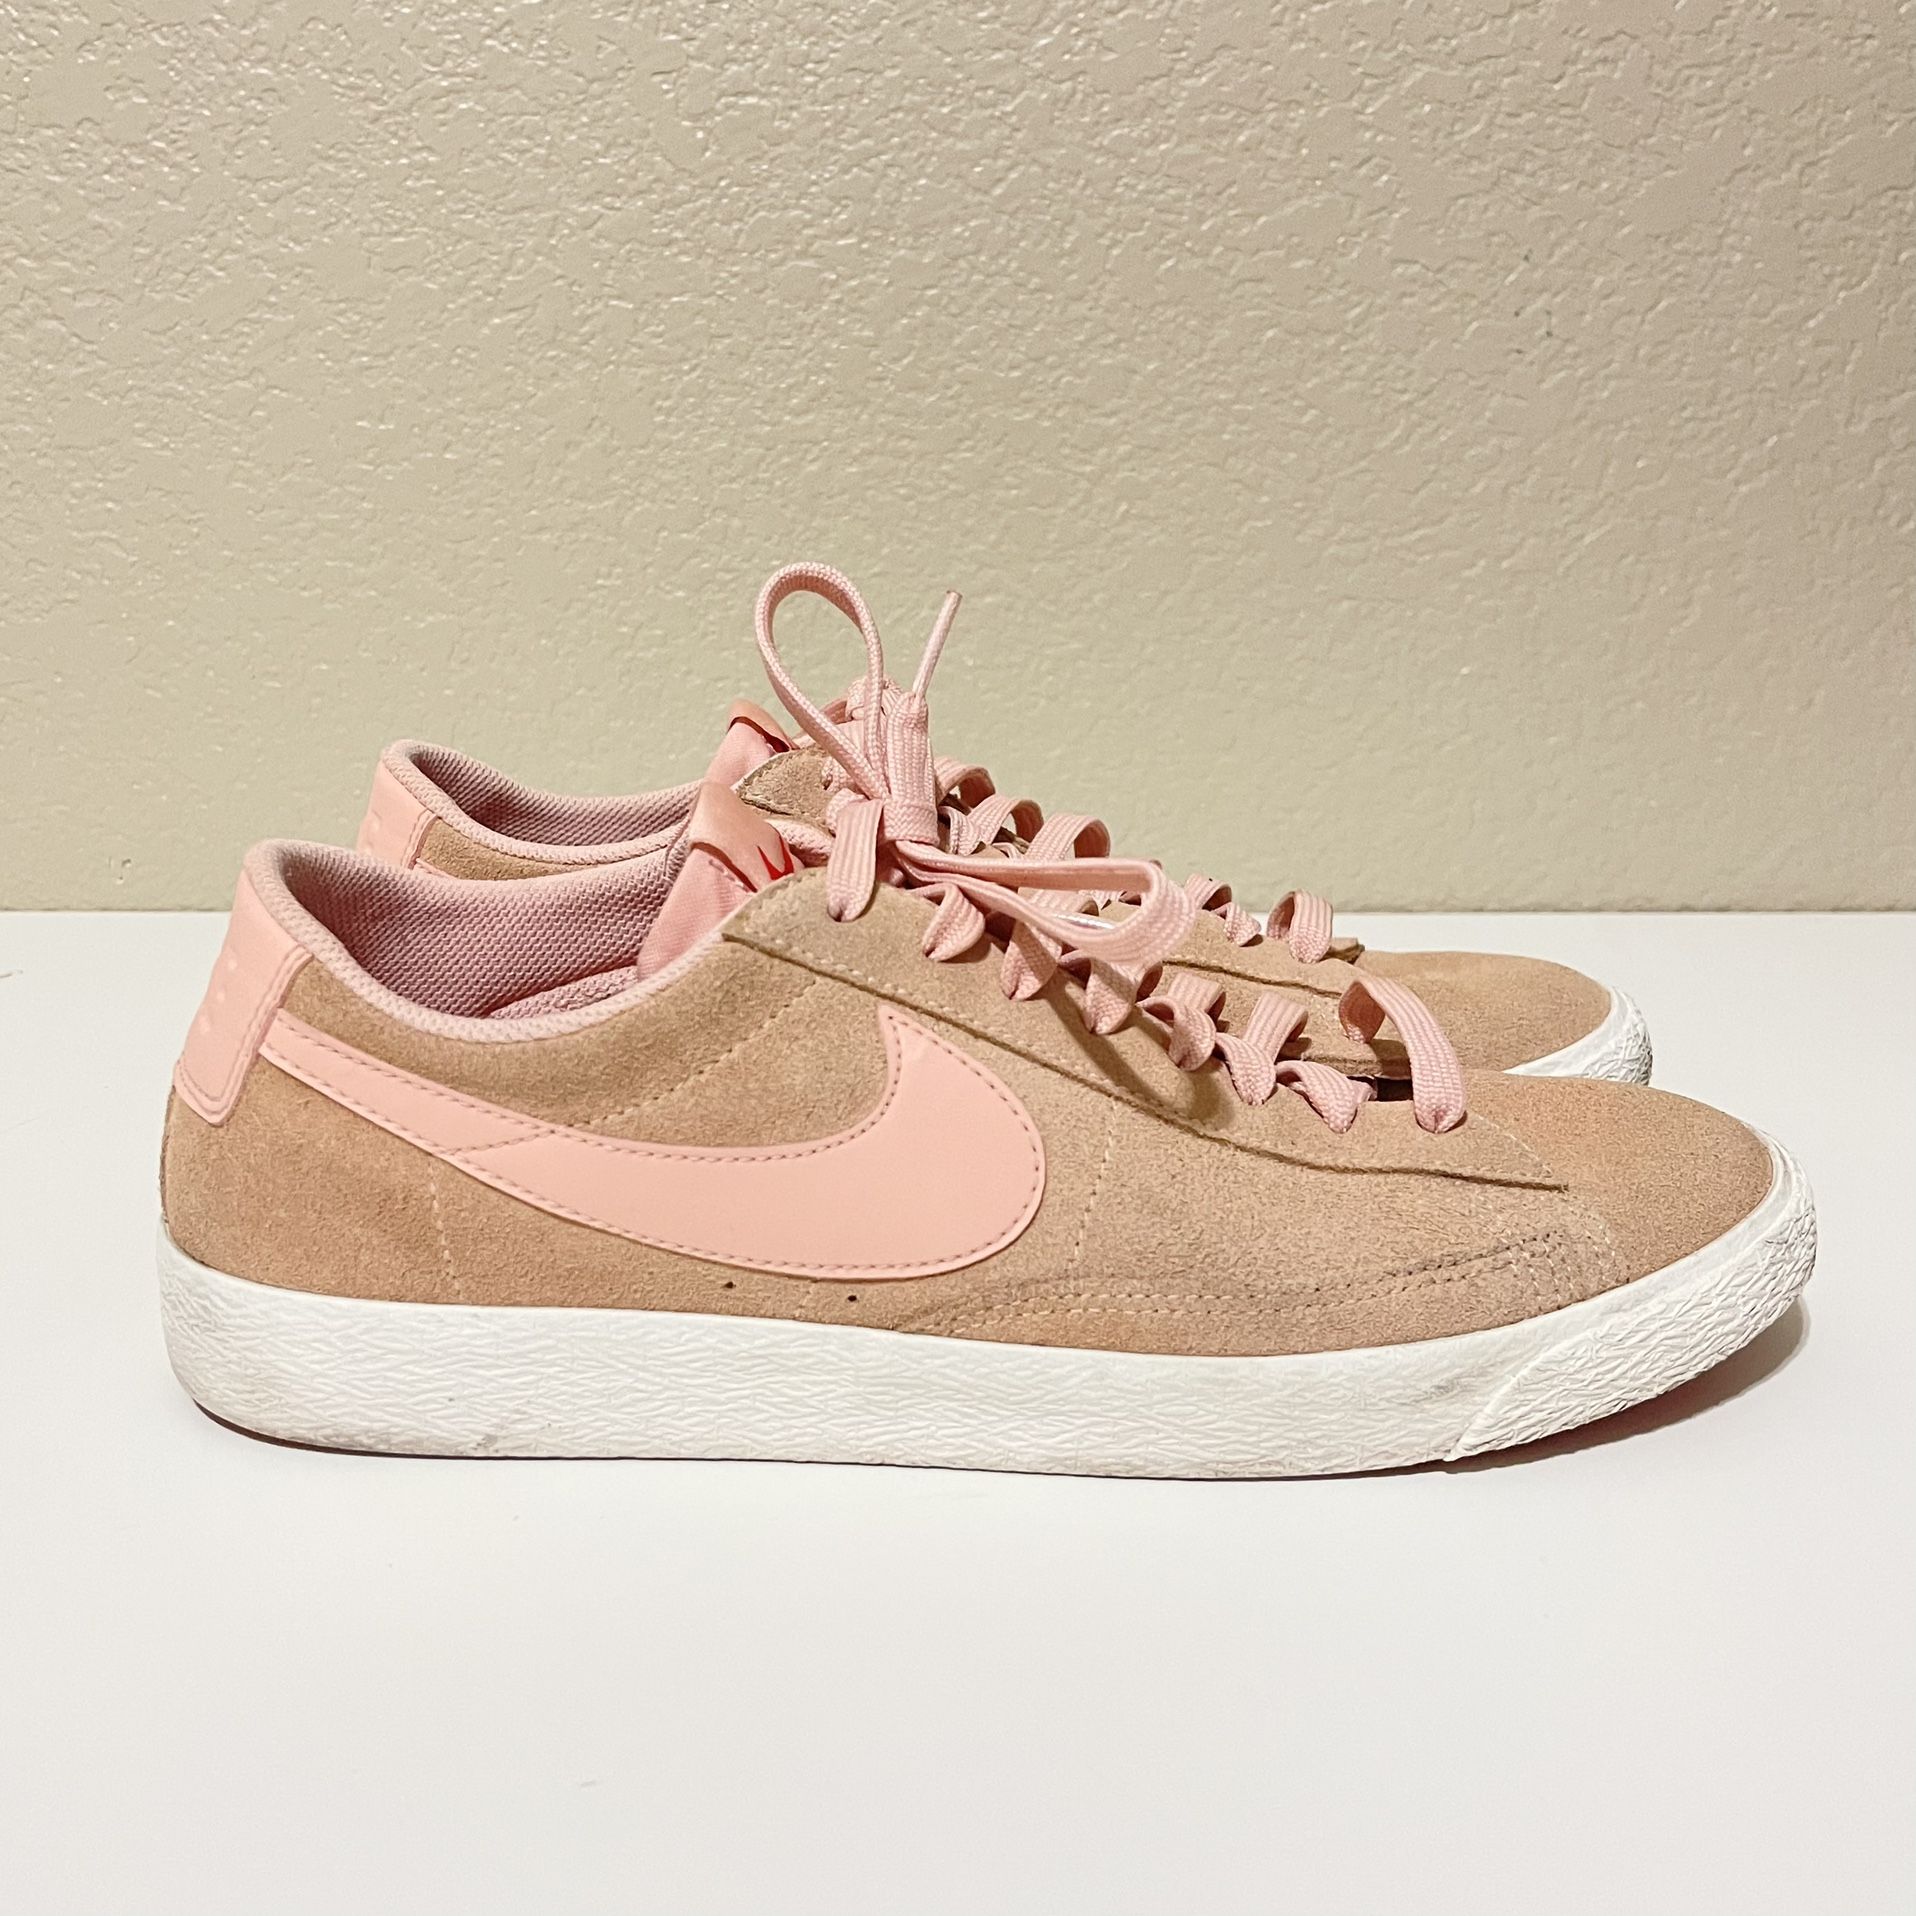 Women’s Nike Blazer Low Suede Pink Shoes